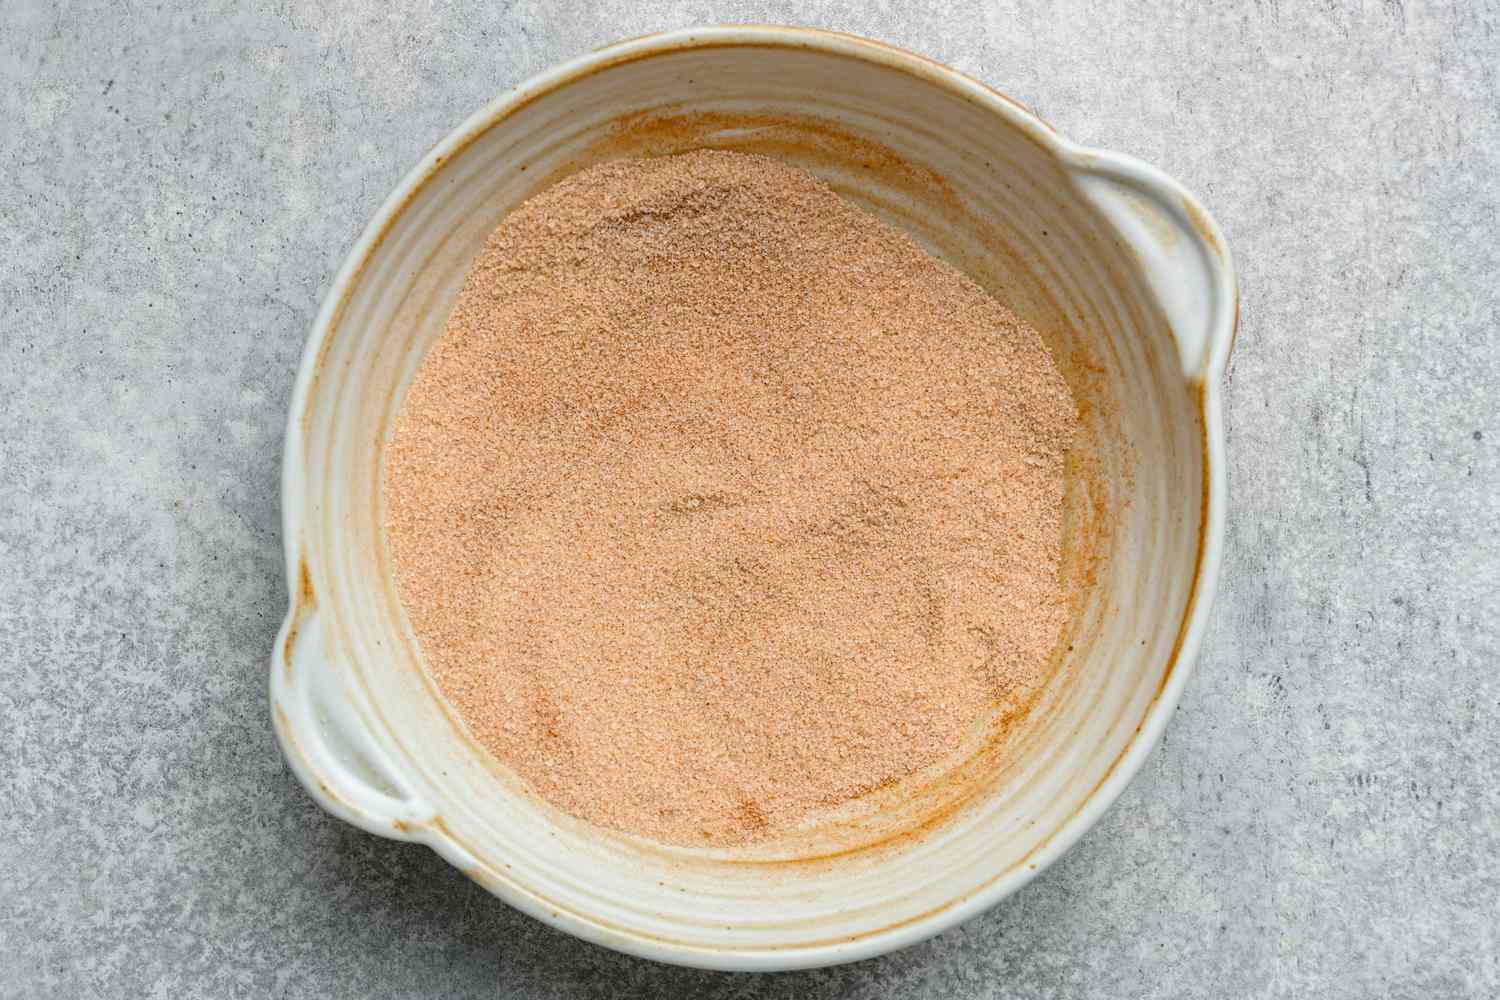 A bowl of cinnamon and sugar